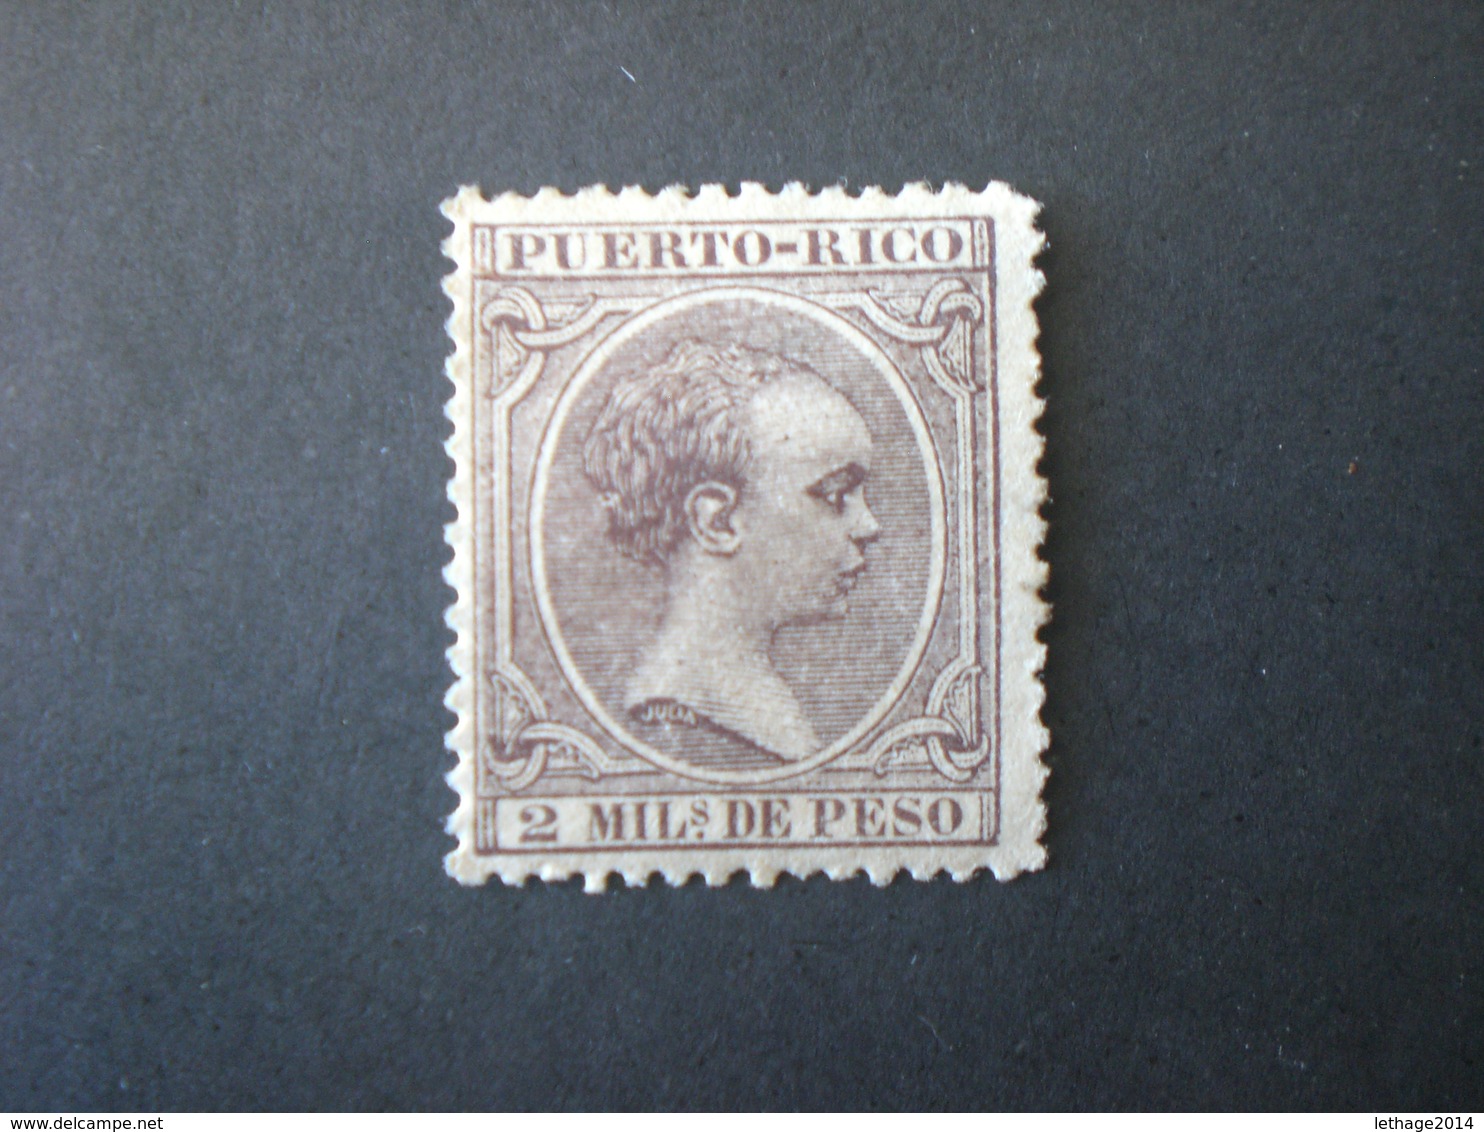 PORTO RICO PUERTO RICO 1891 King Alfonso XII Of Spain MNG - Puerto Rico